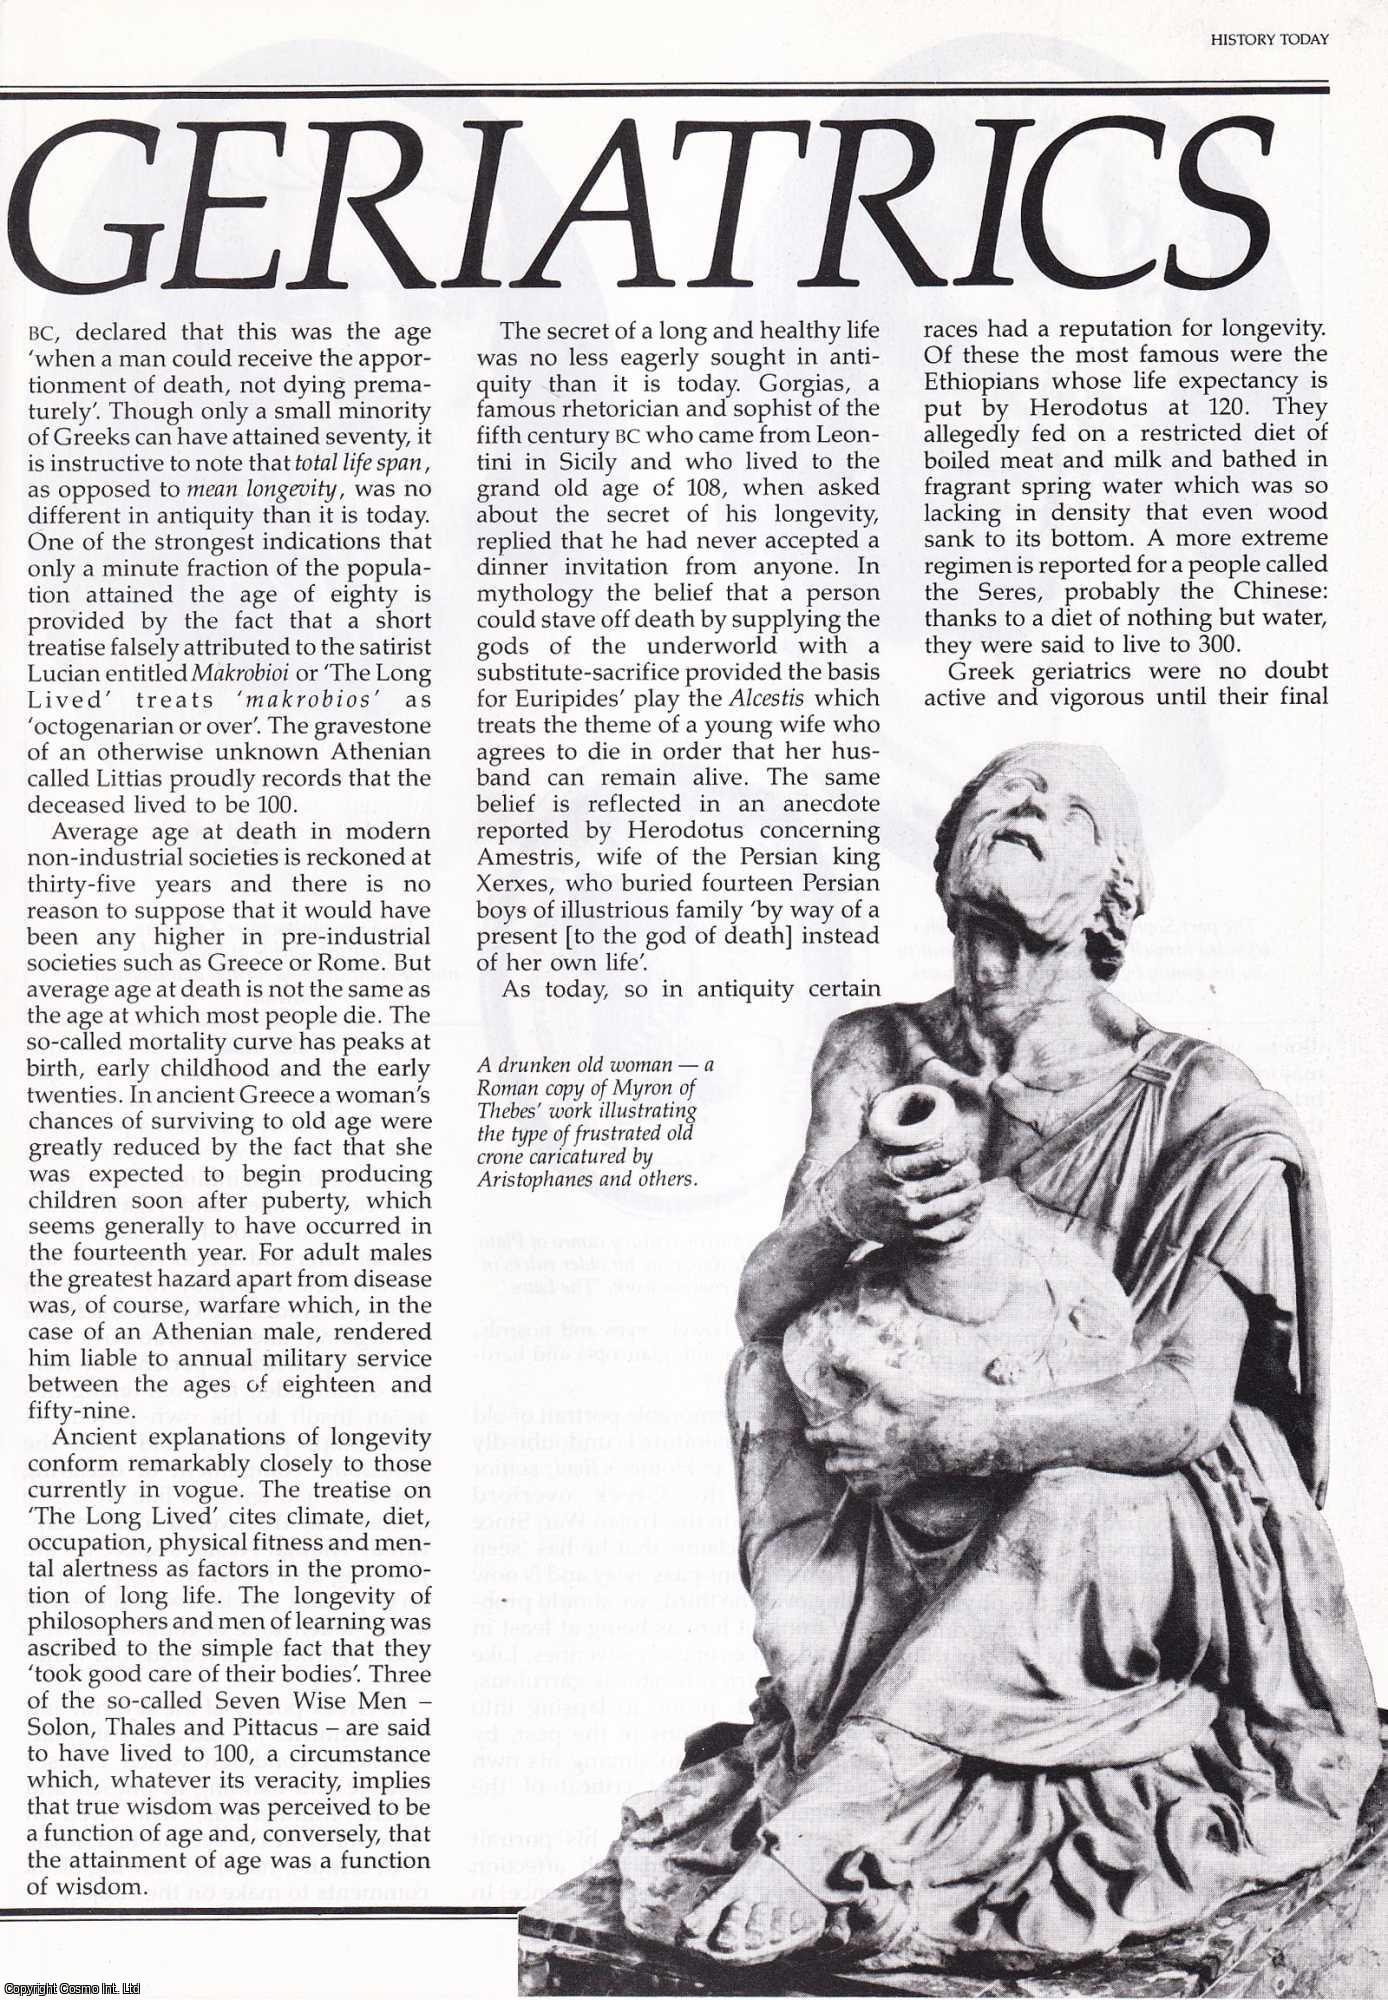 Robert Garland - Greek Geriatrics. An original article from History Today, 1987.